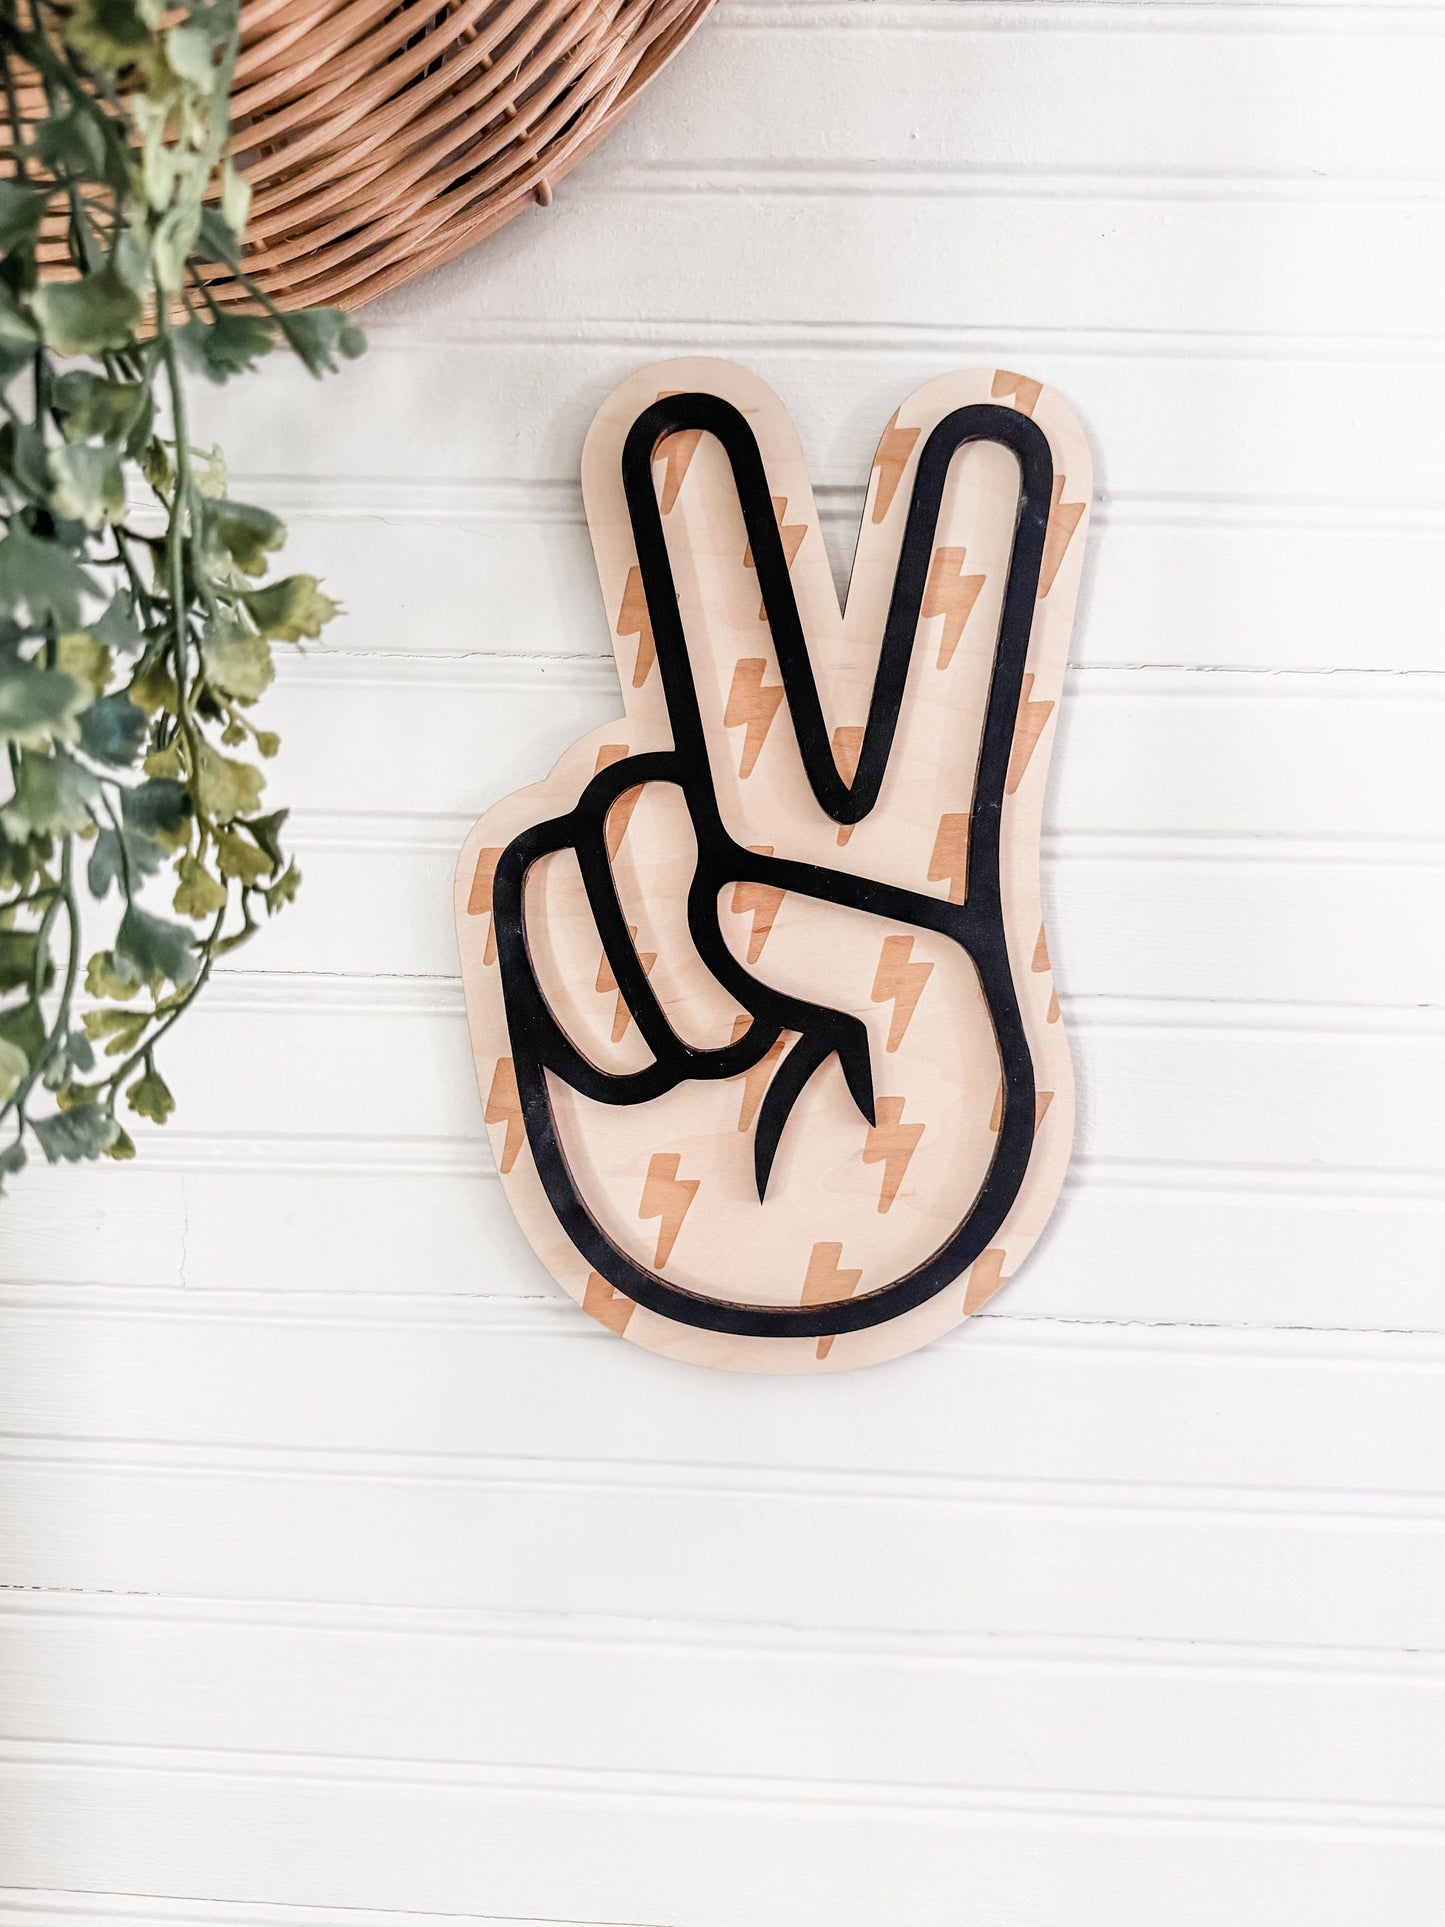 Lightening Bolt Hand Peace Sign | Engraved Wood Sign | Nursery Decor | Handmade | Retro Wood Cut Out | Laser Engraved